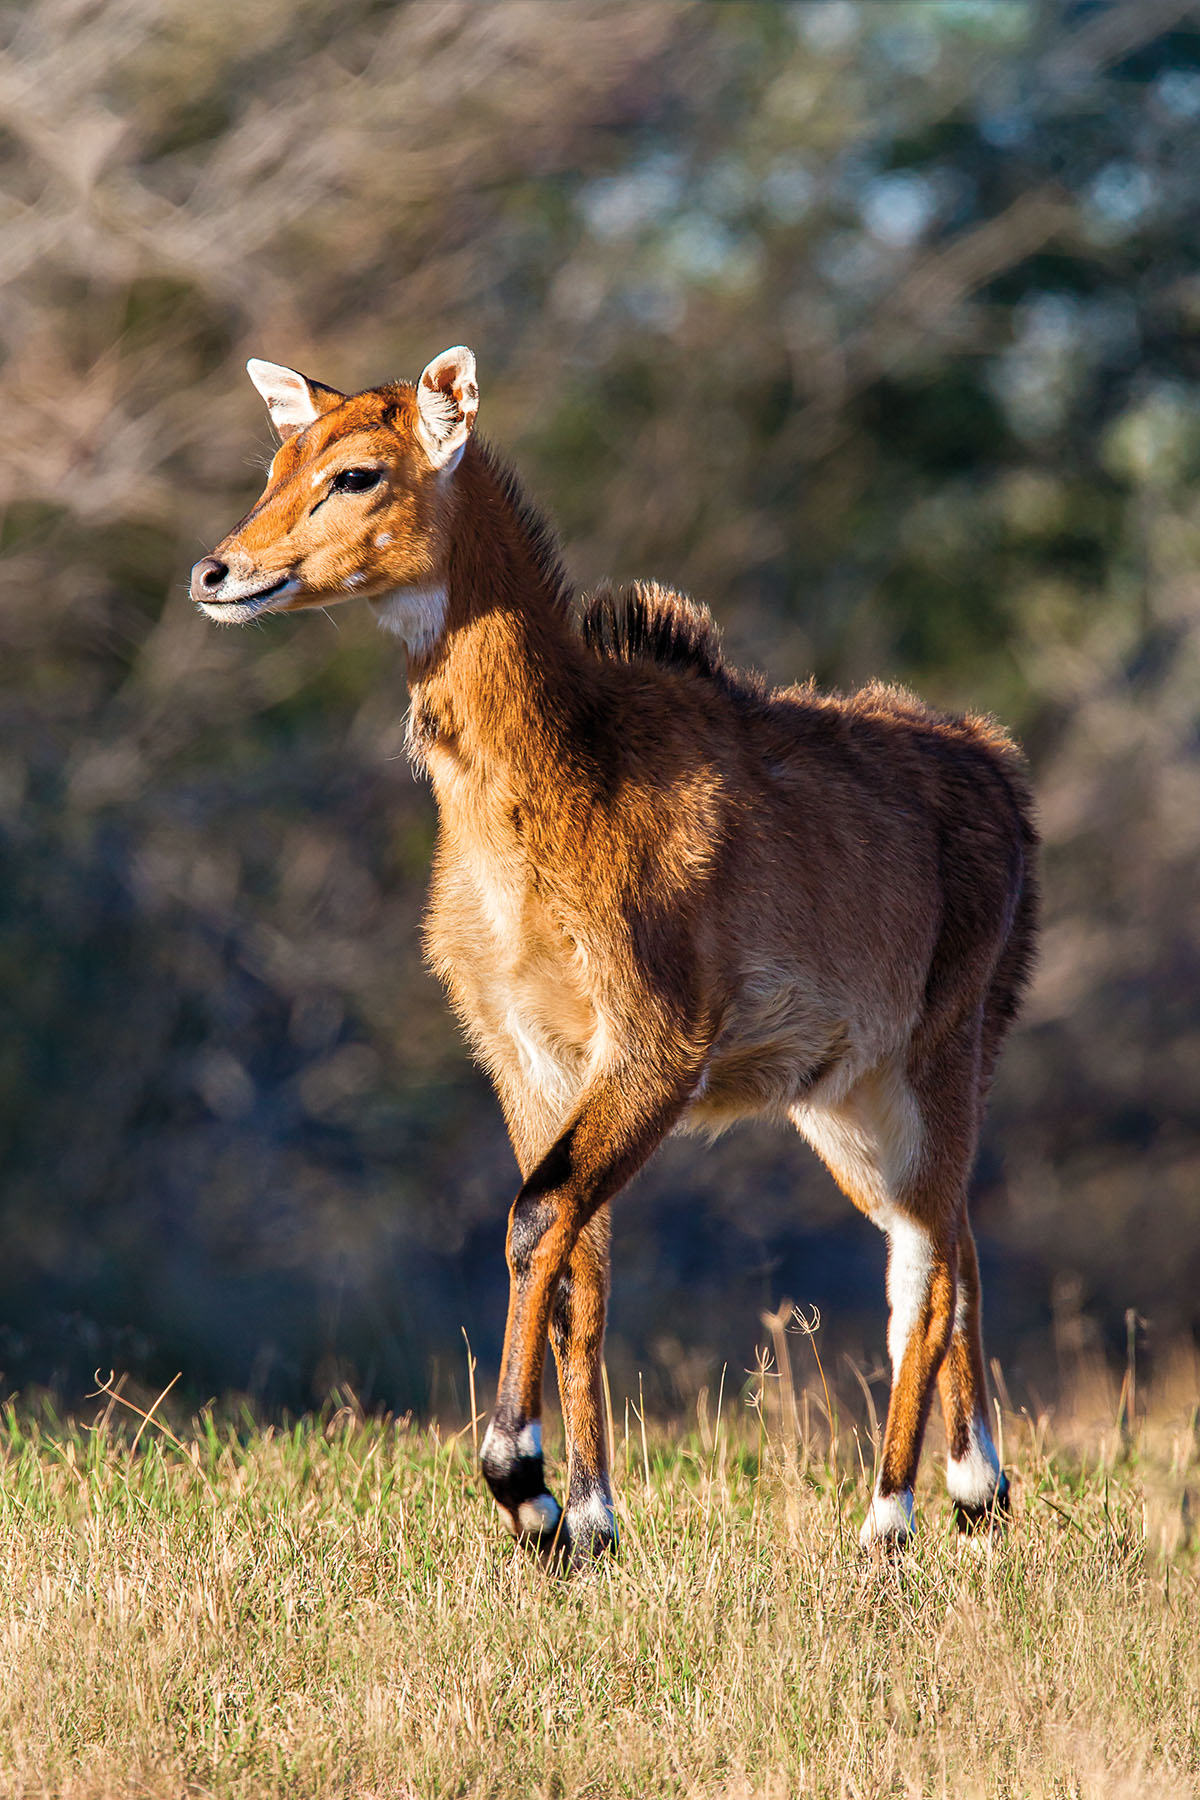 A calf nilgai raises one hoof while looking across a grass field